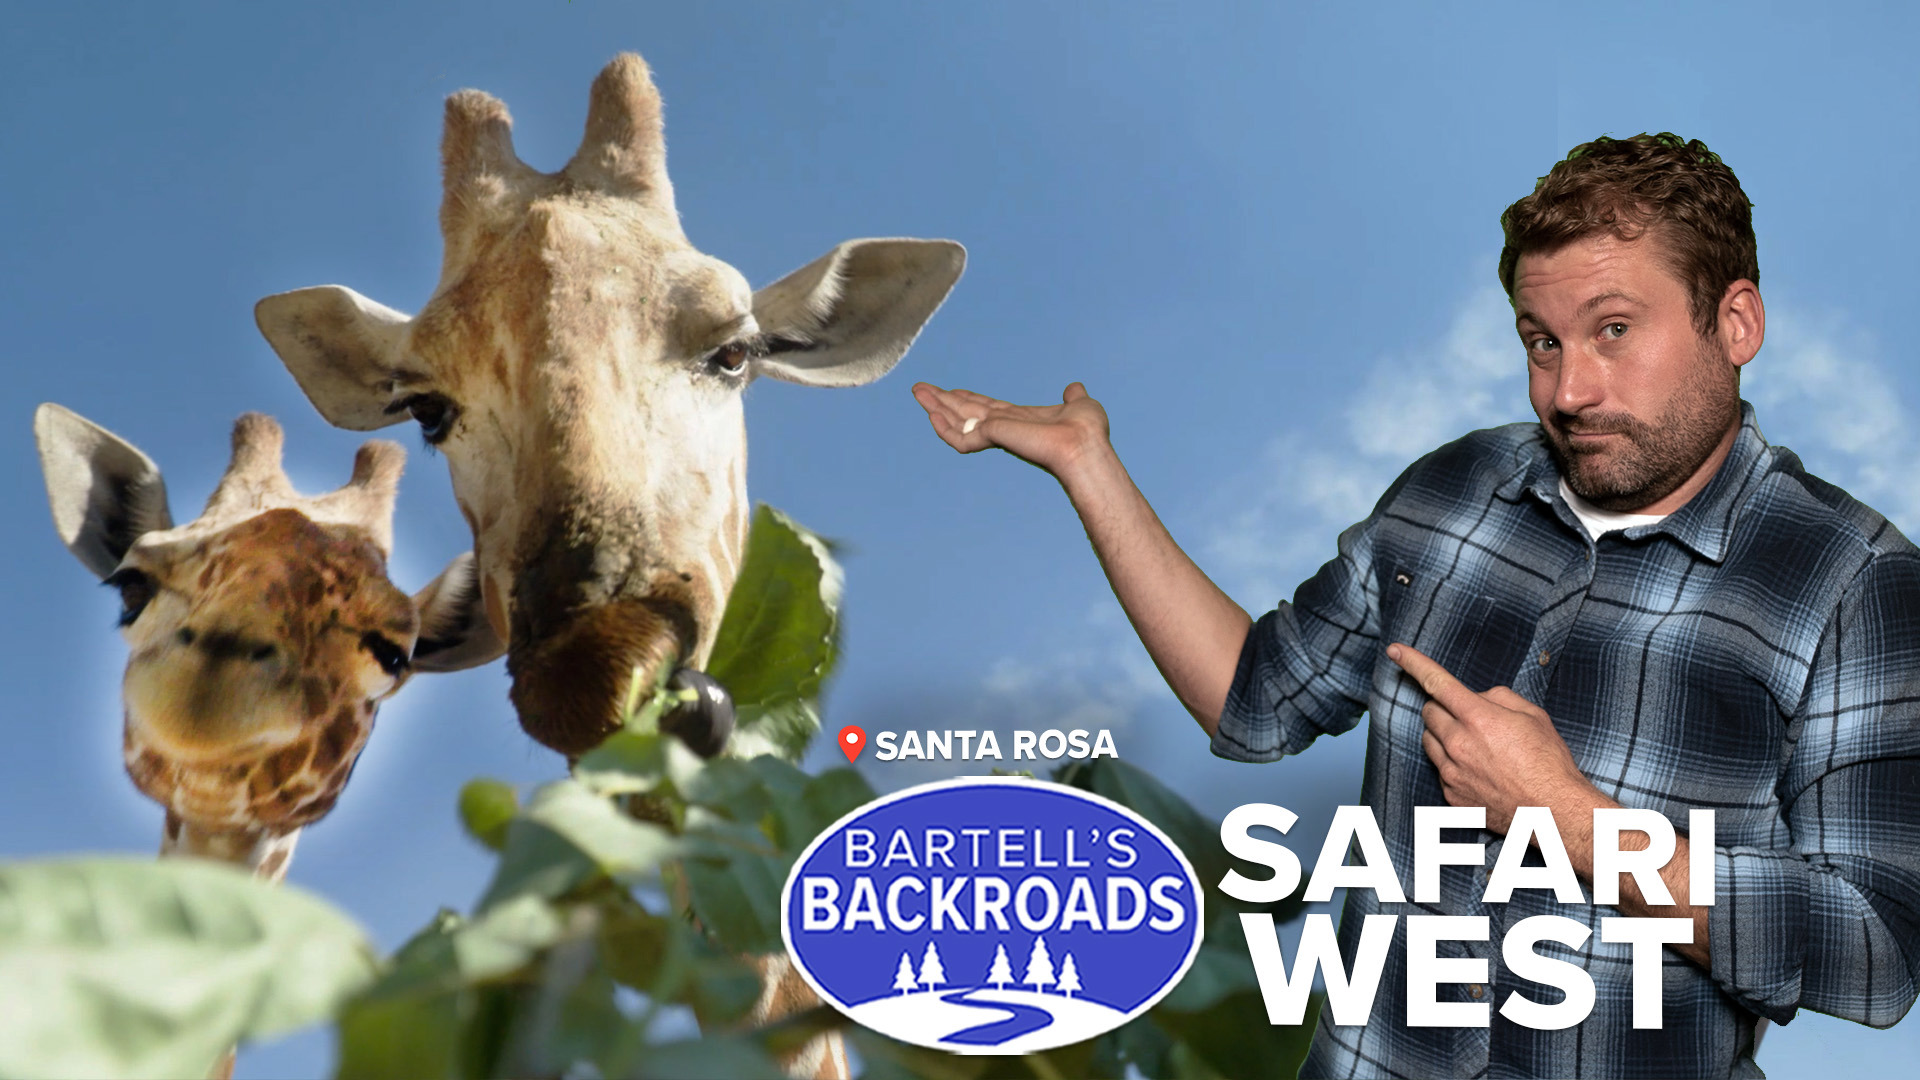 Get an up-close wildlife encounter at Safari West in Santa Rosa.